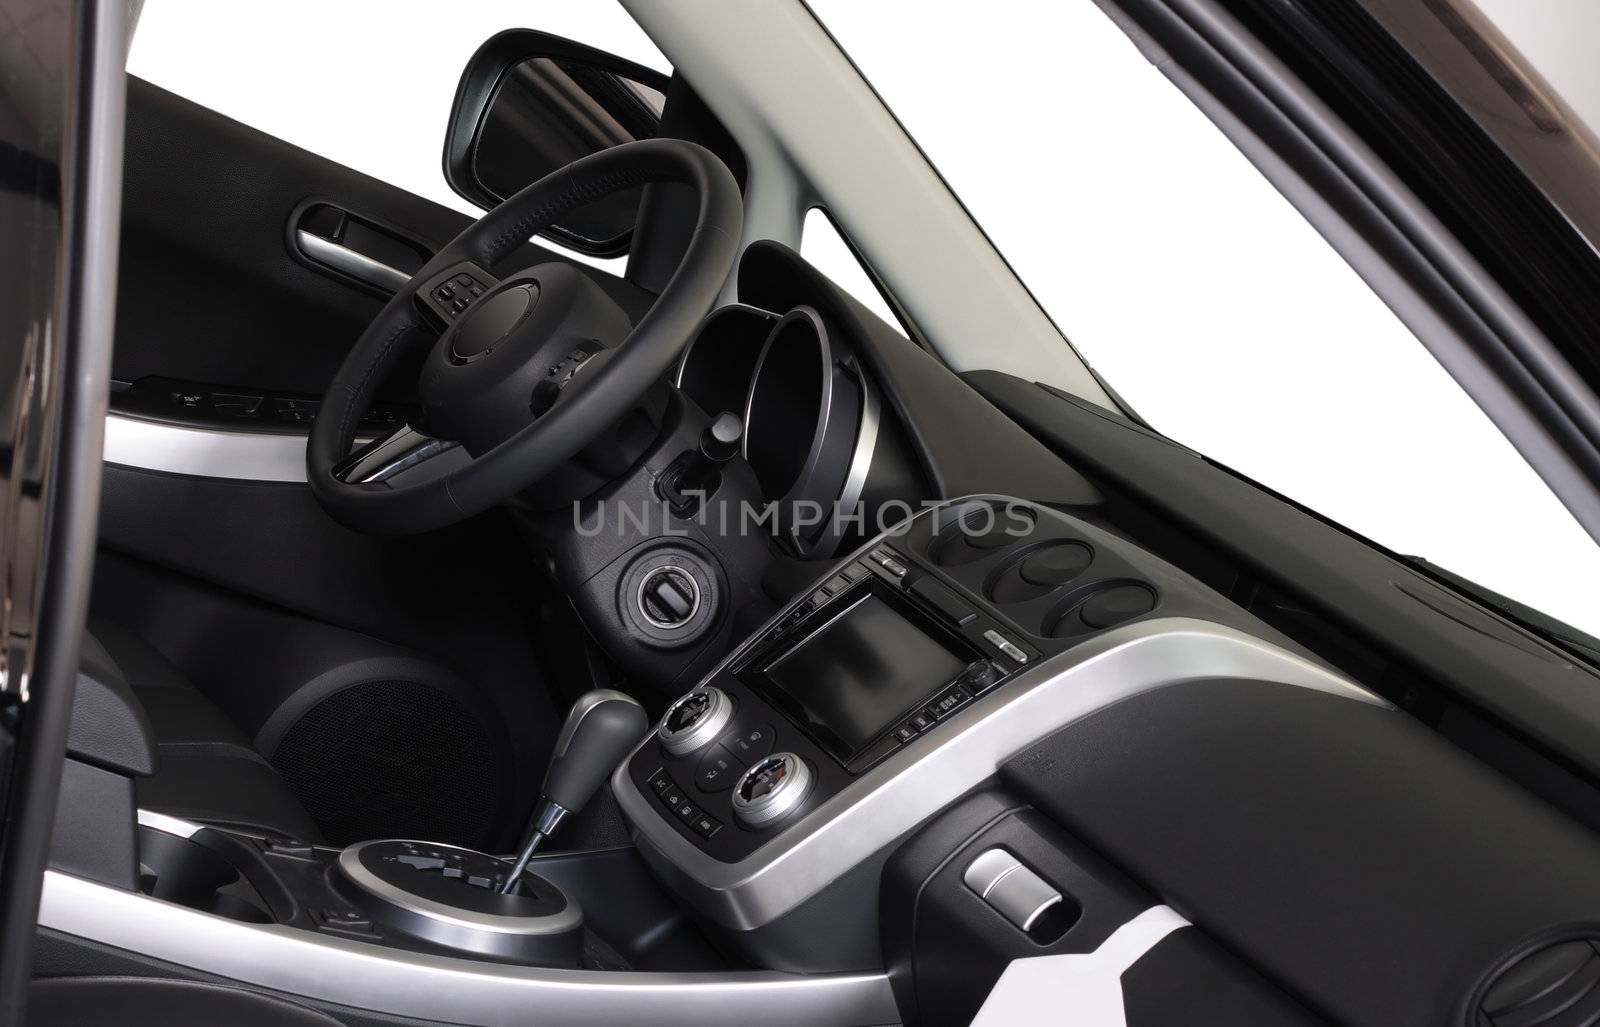 Car interior - dashboard and steering wheel by Gdolgikh